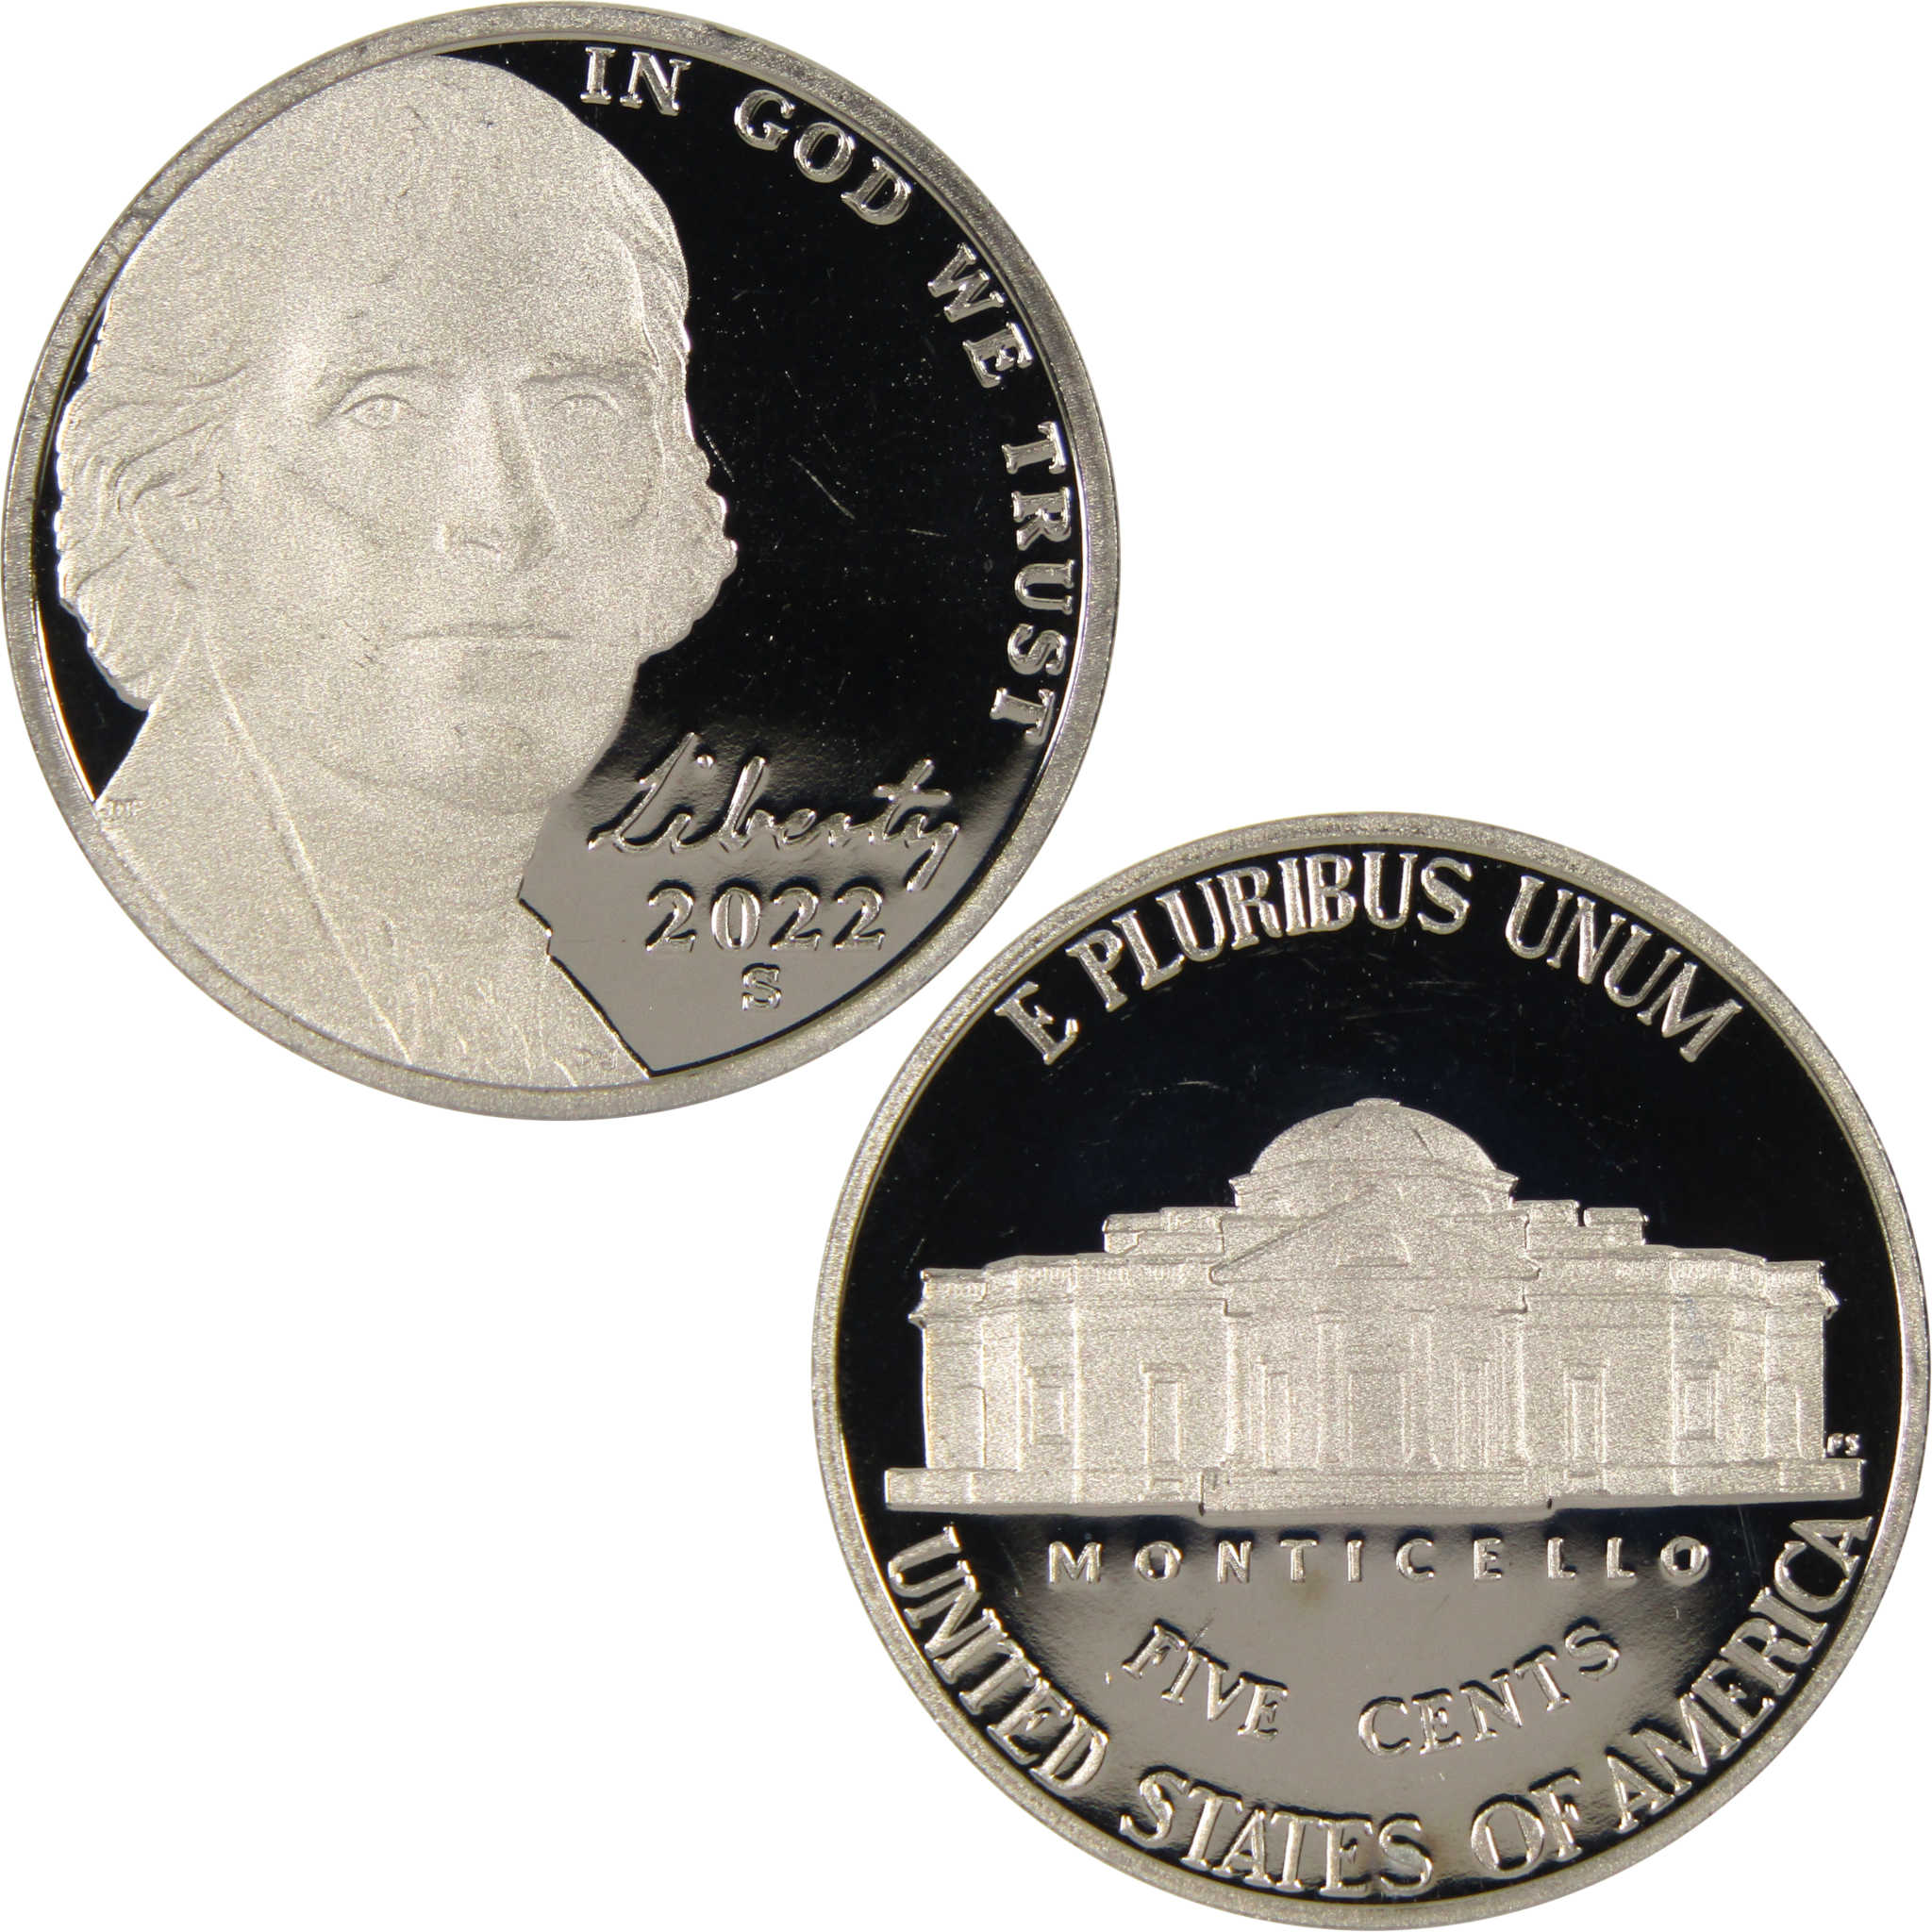 2022 S Jefferson Nickel 5c Proof Coin